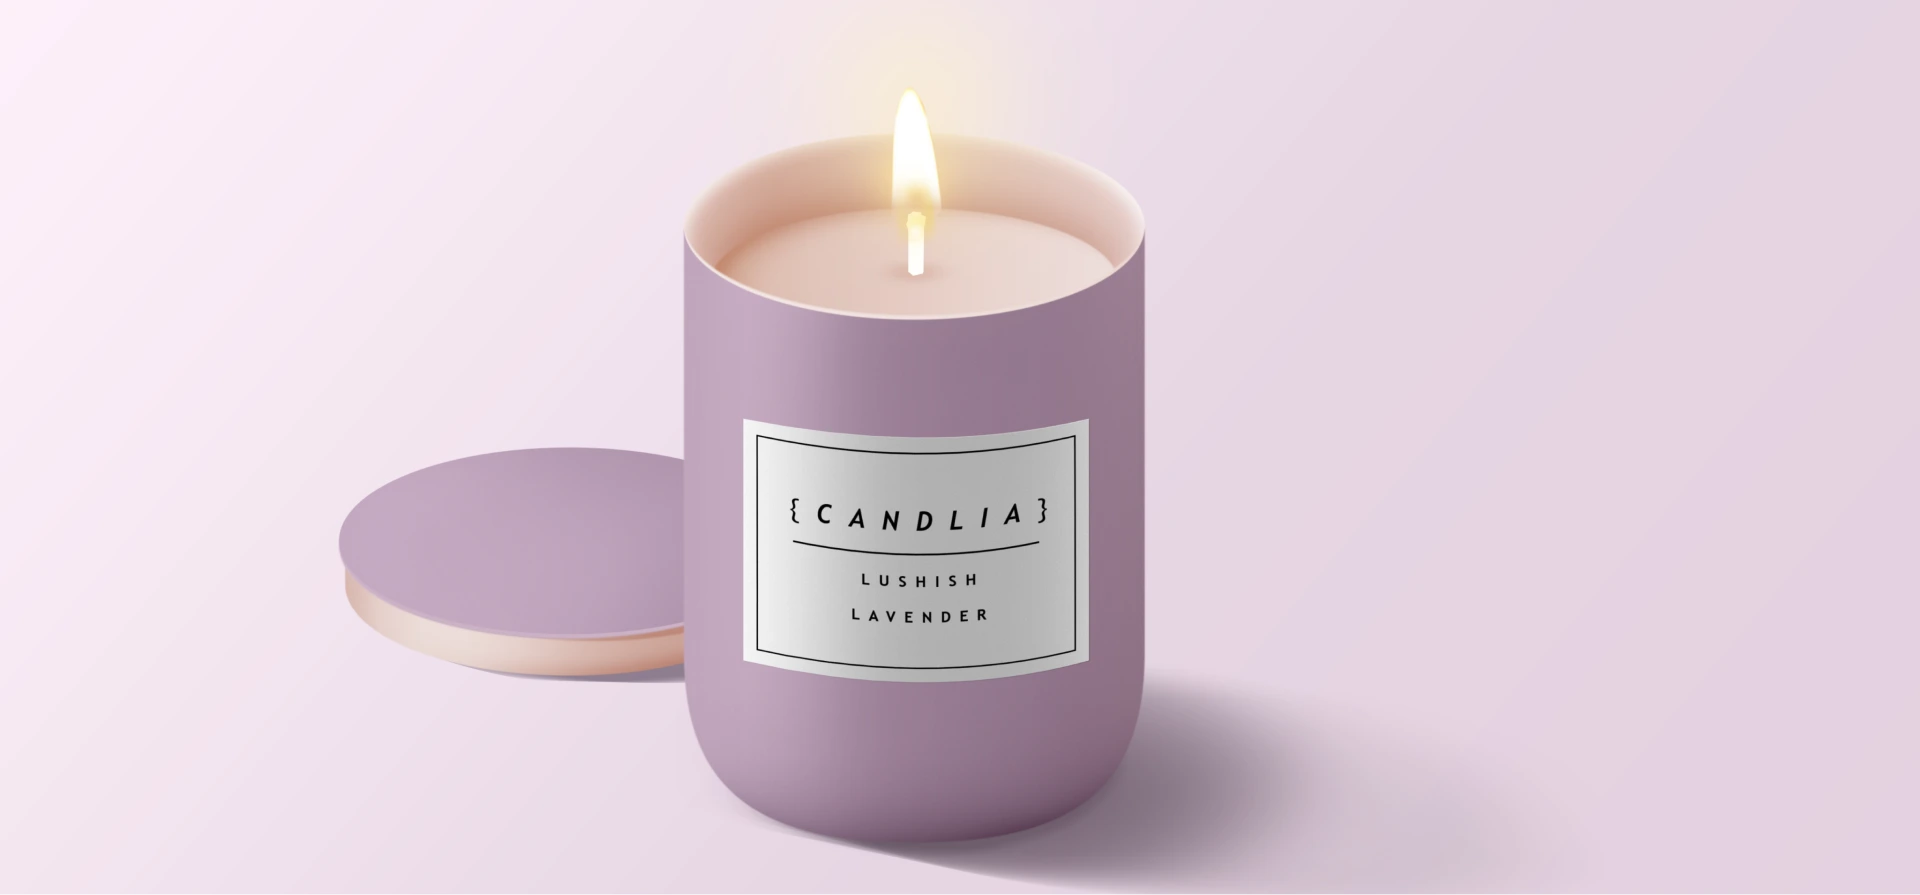 Slideshow - A puerple Lushish Lavender candle